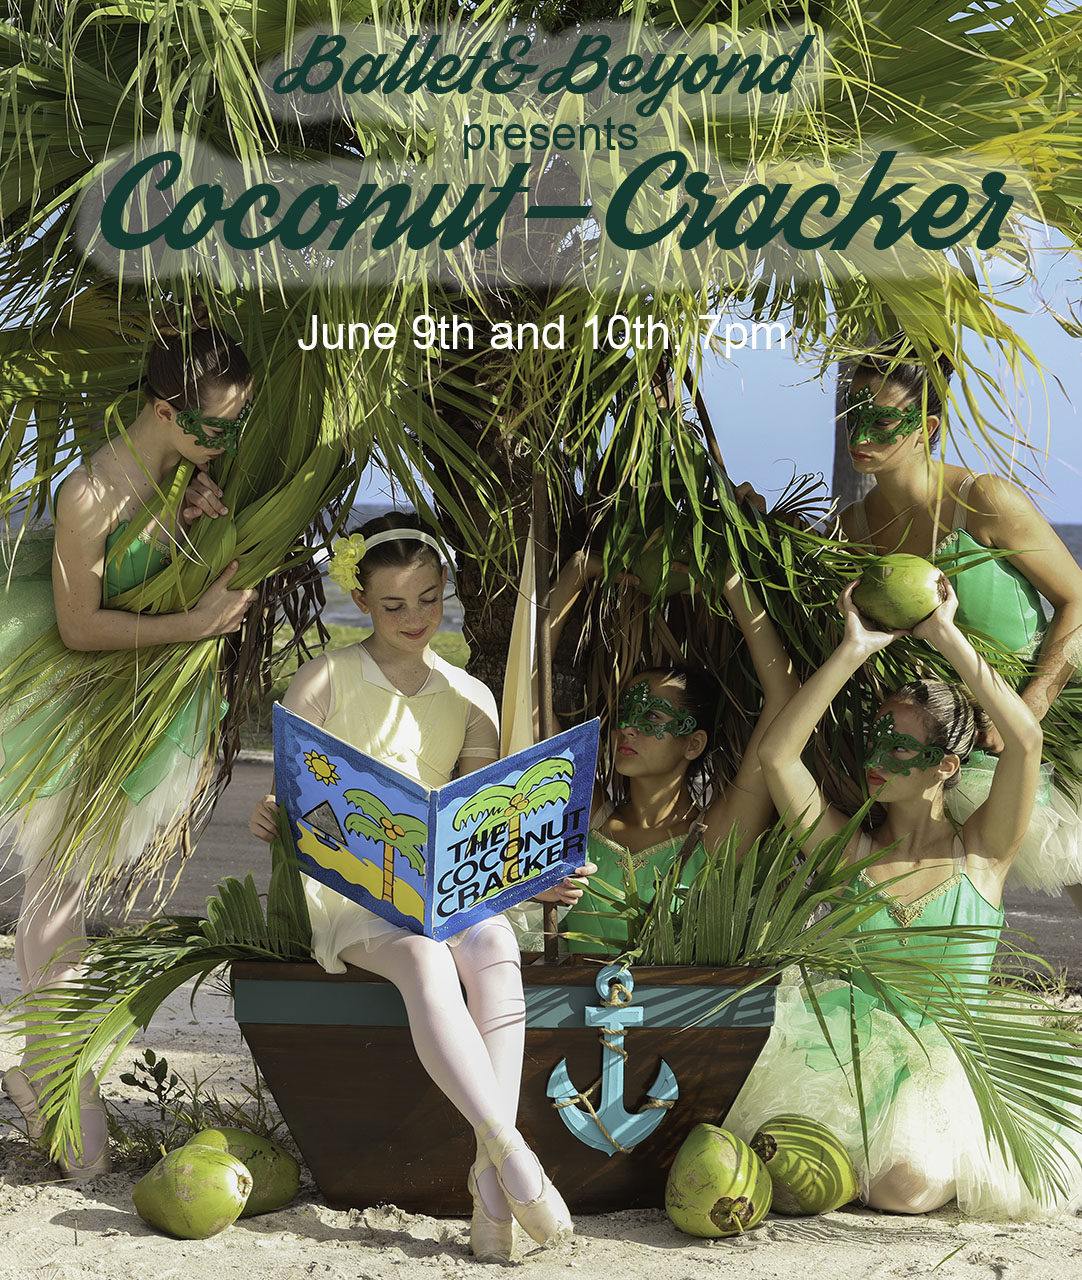 Ballet & Beyond Presents: The Coconut-Cracker 